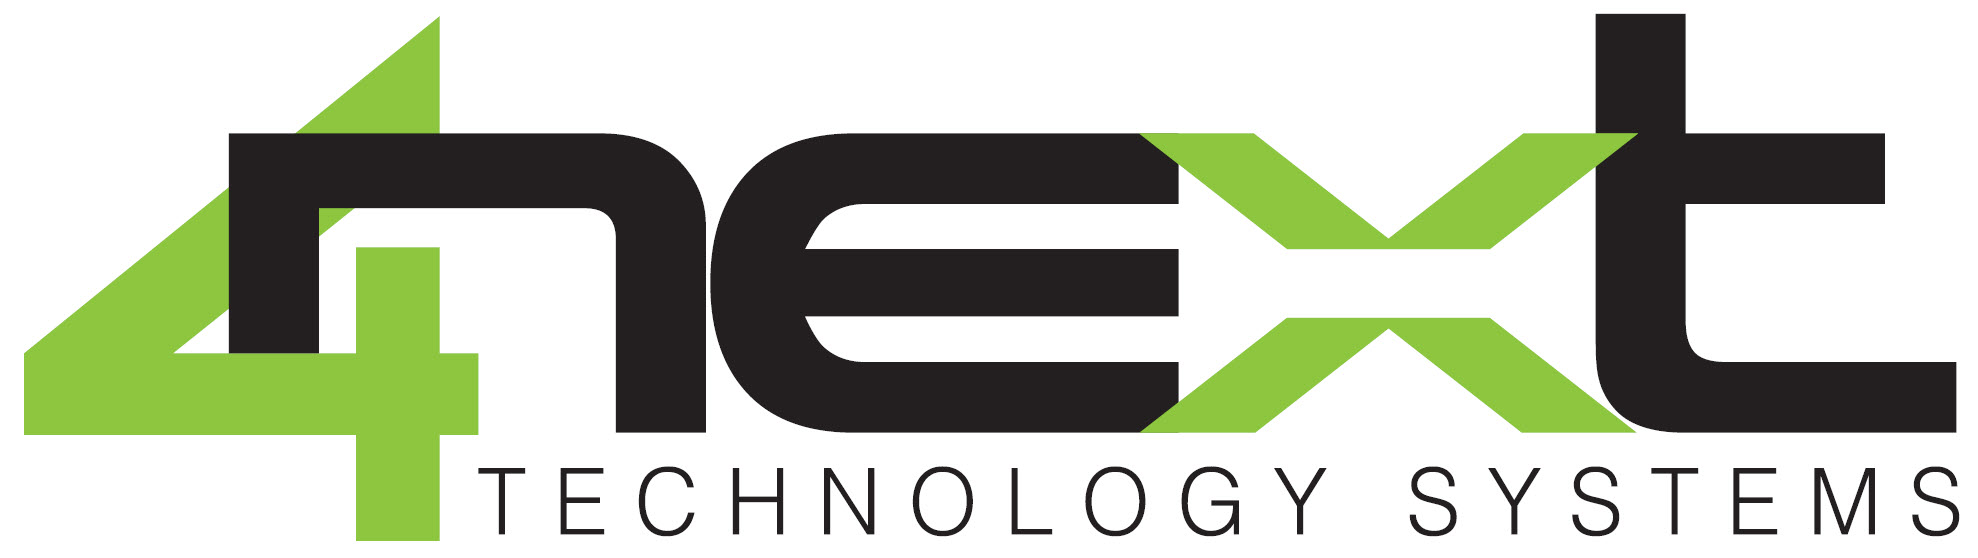 4Next Technology systems logo